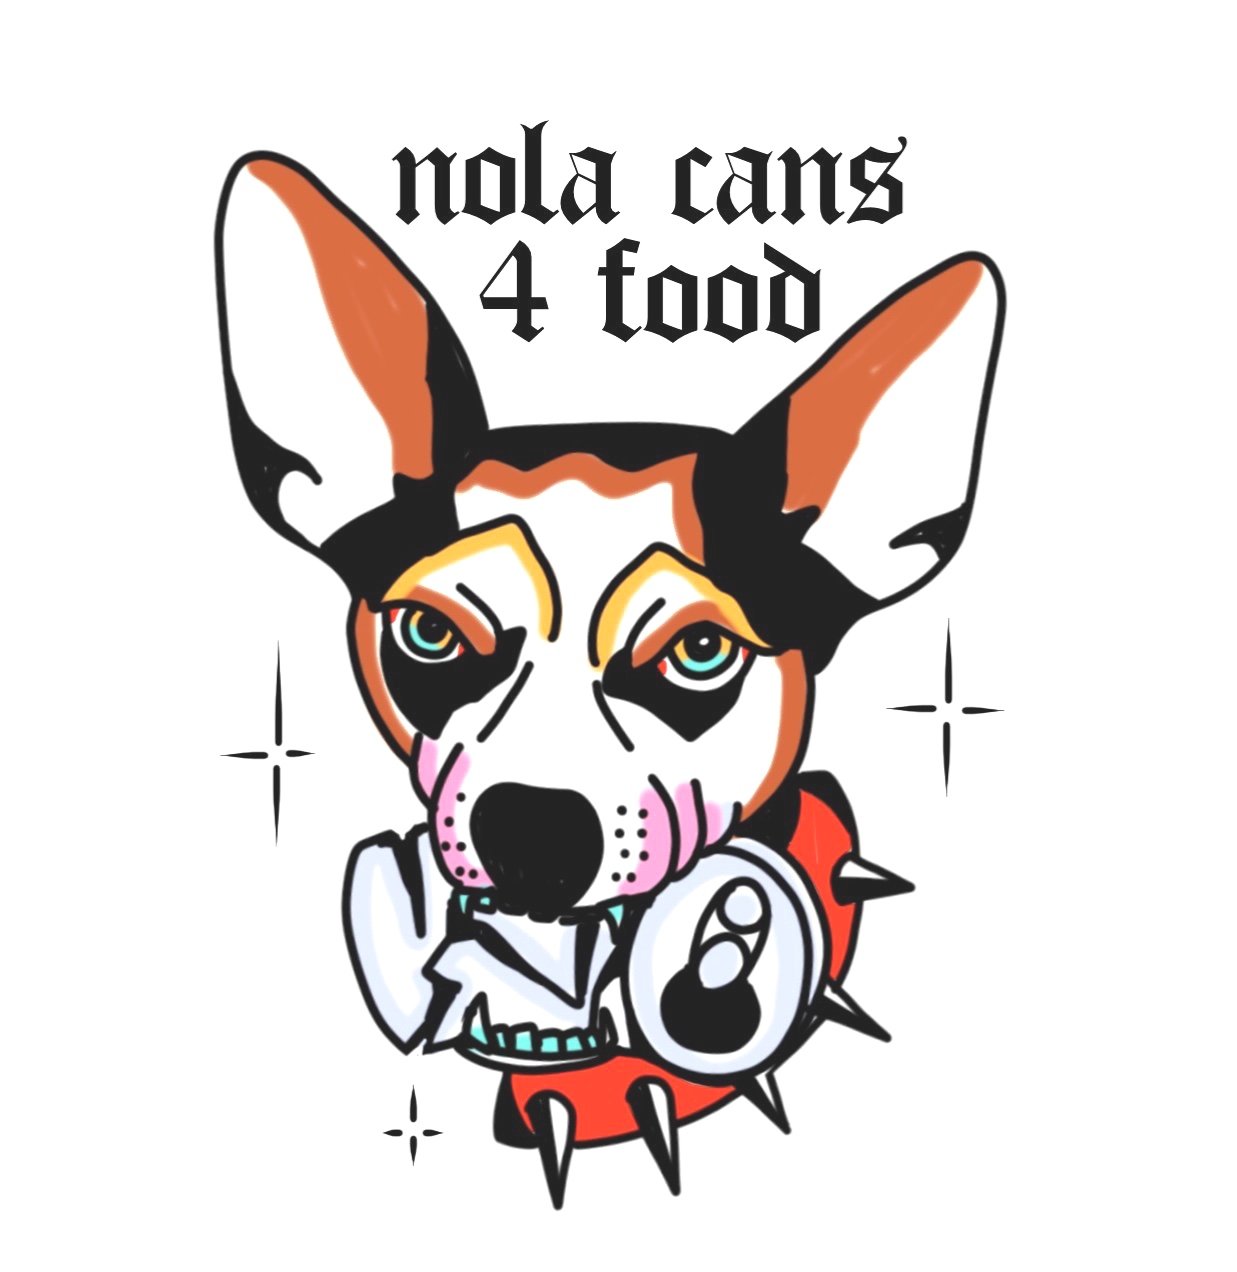 Nola Cans 4 Food